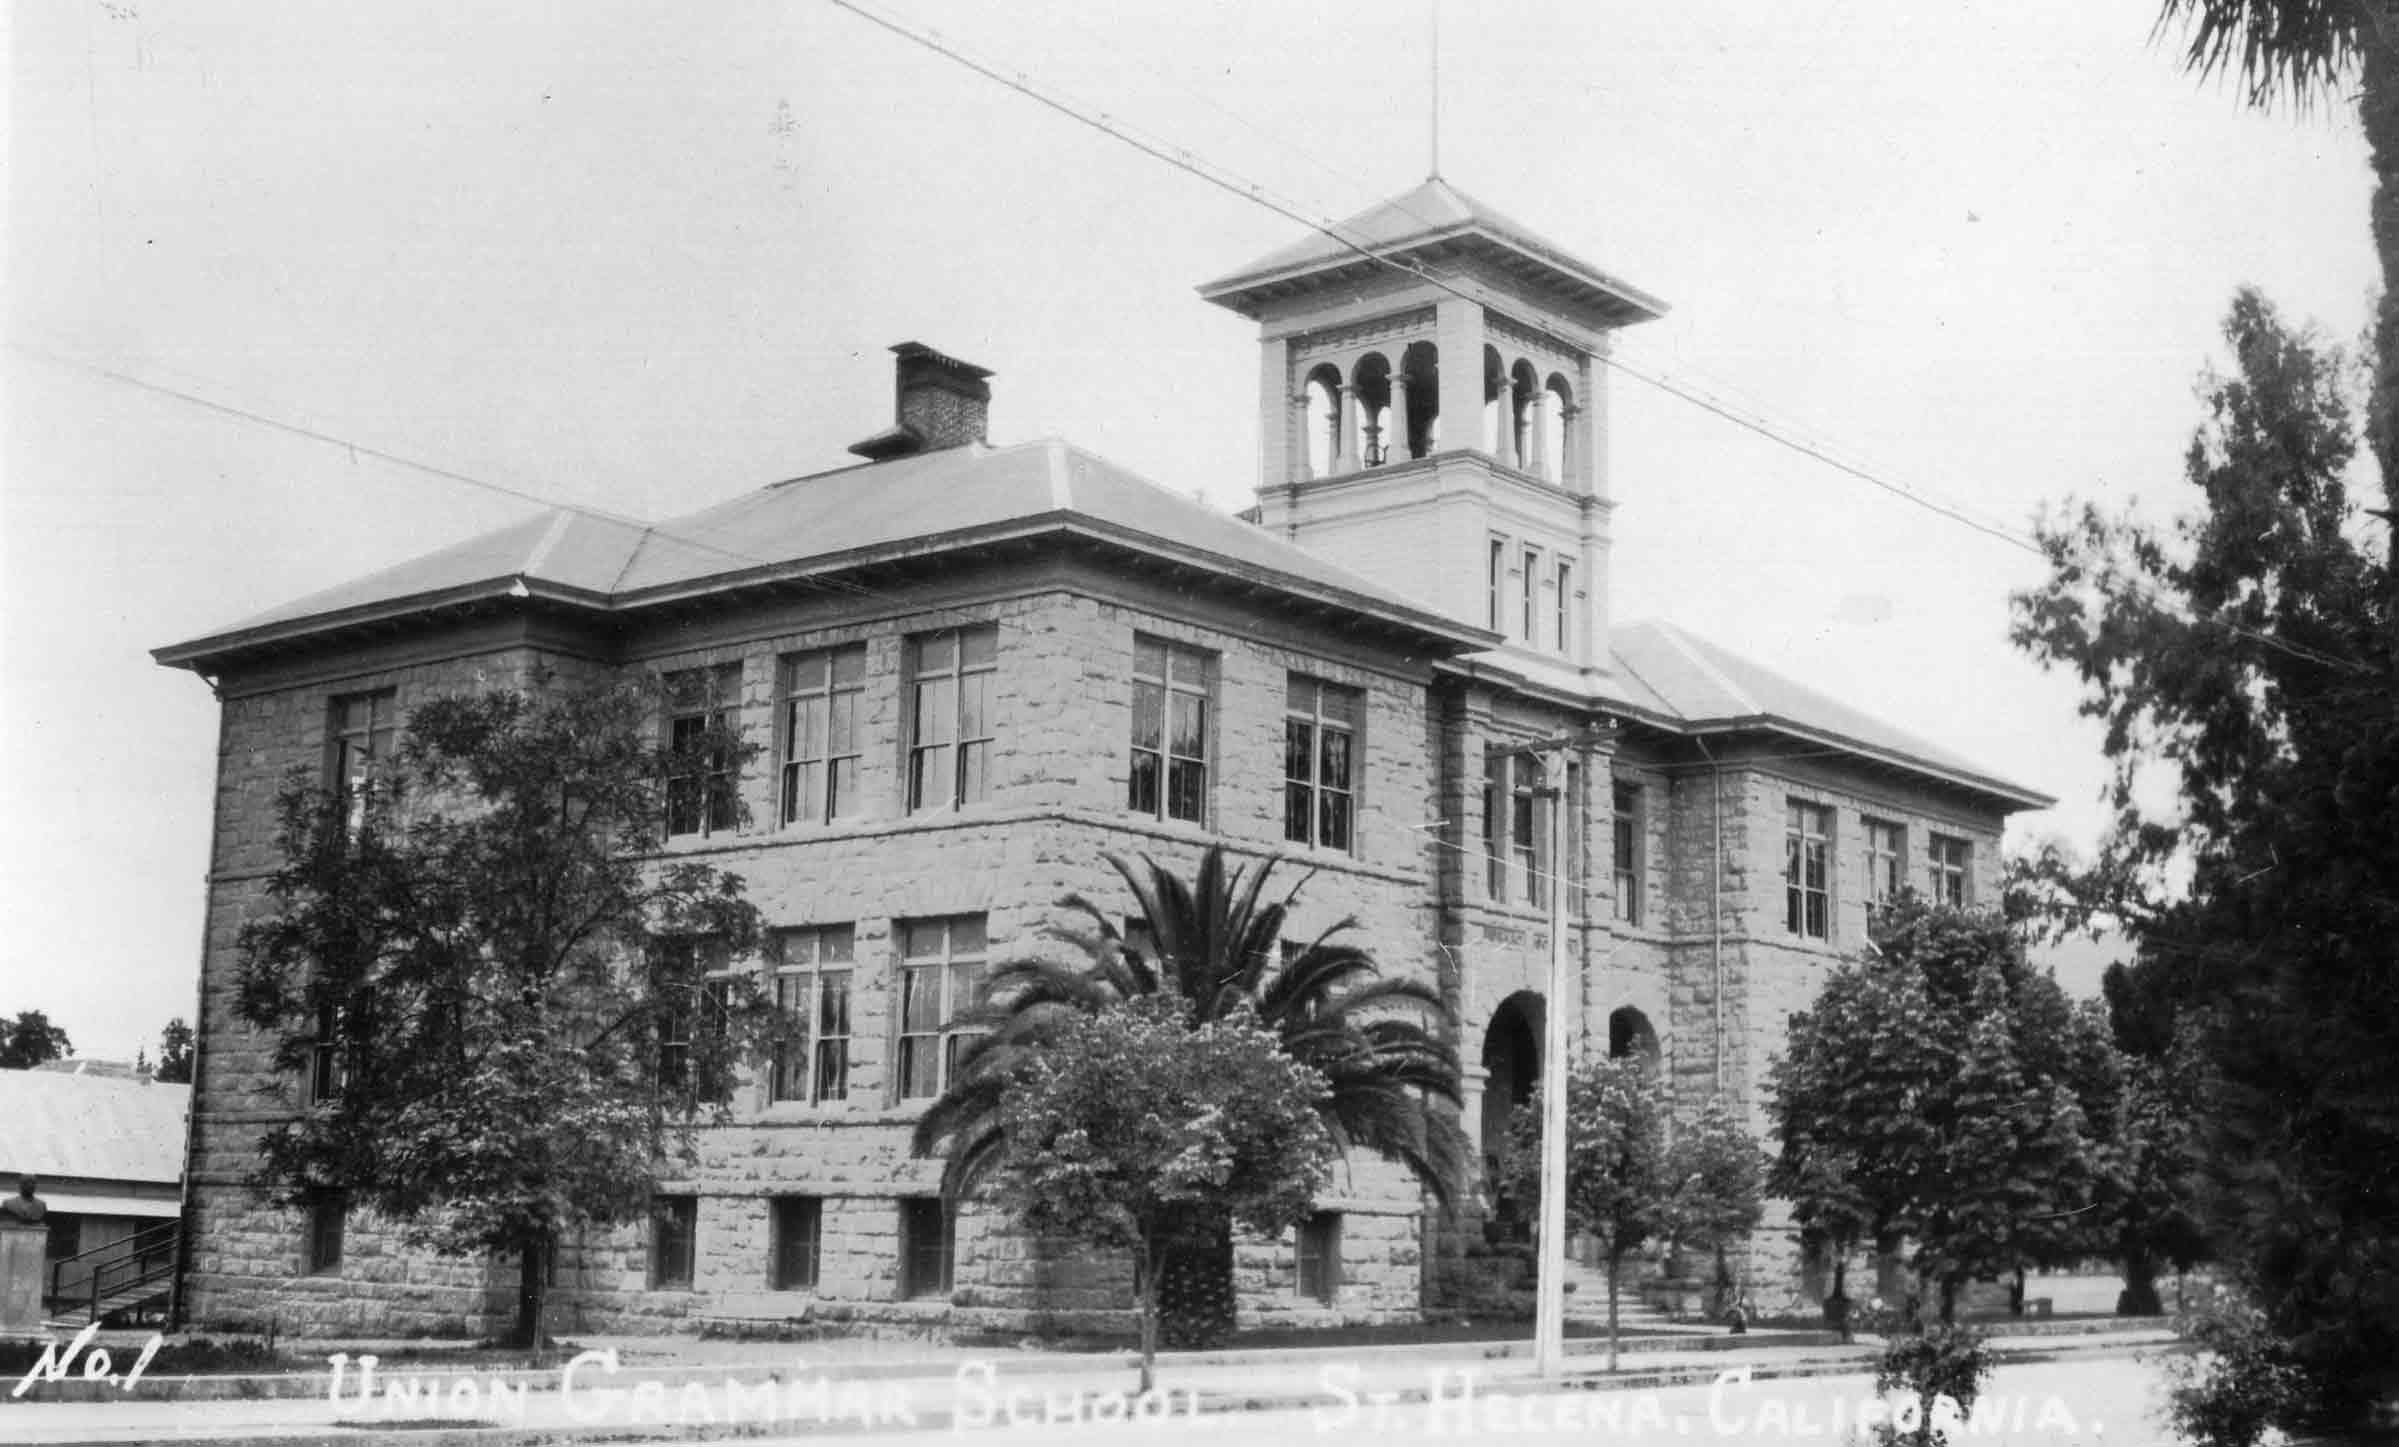 Then: Old grammar school circa 1901